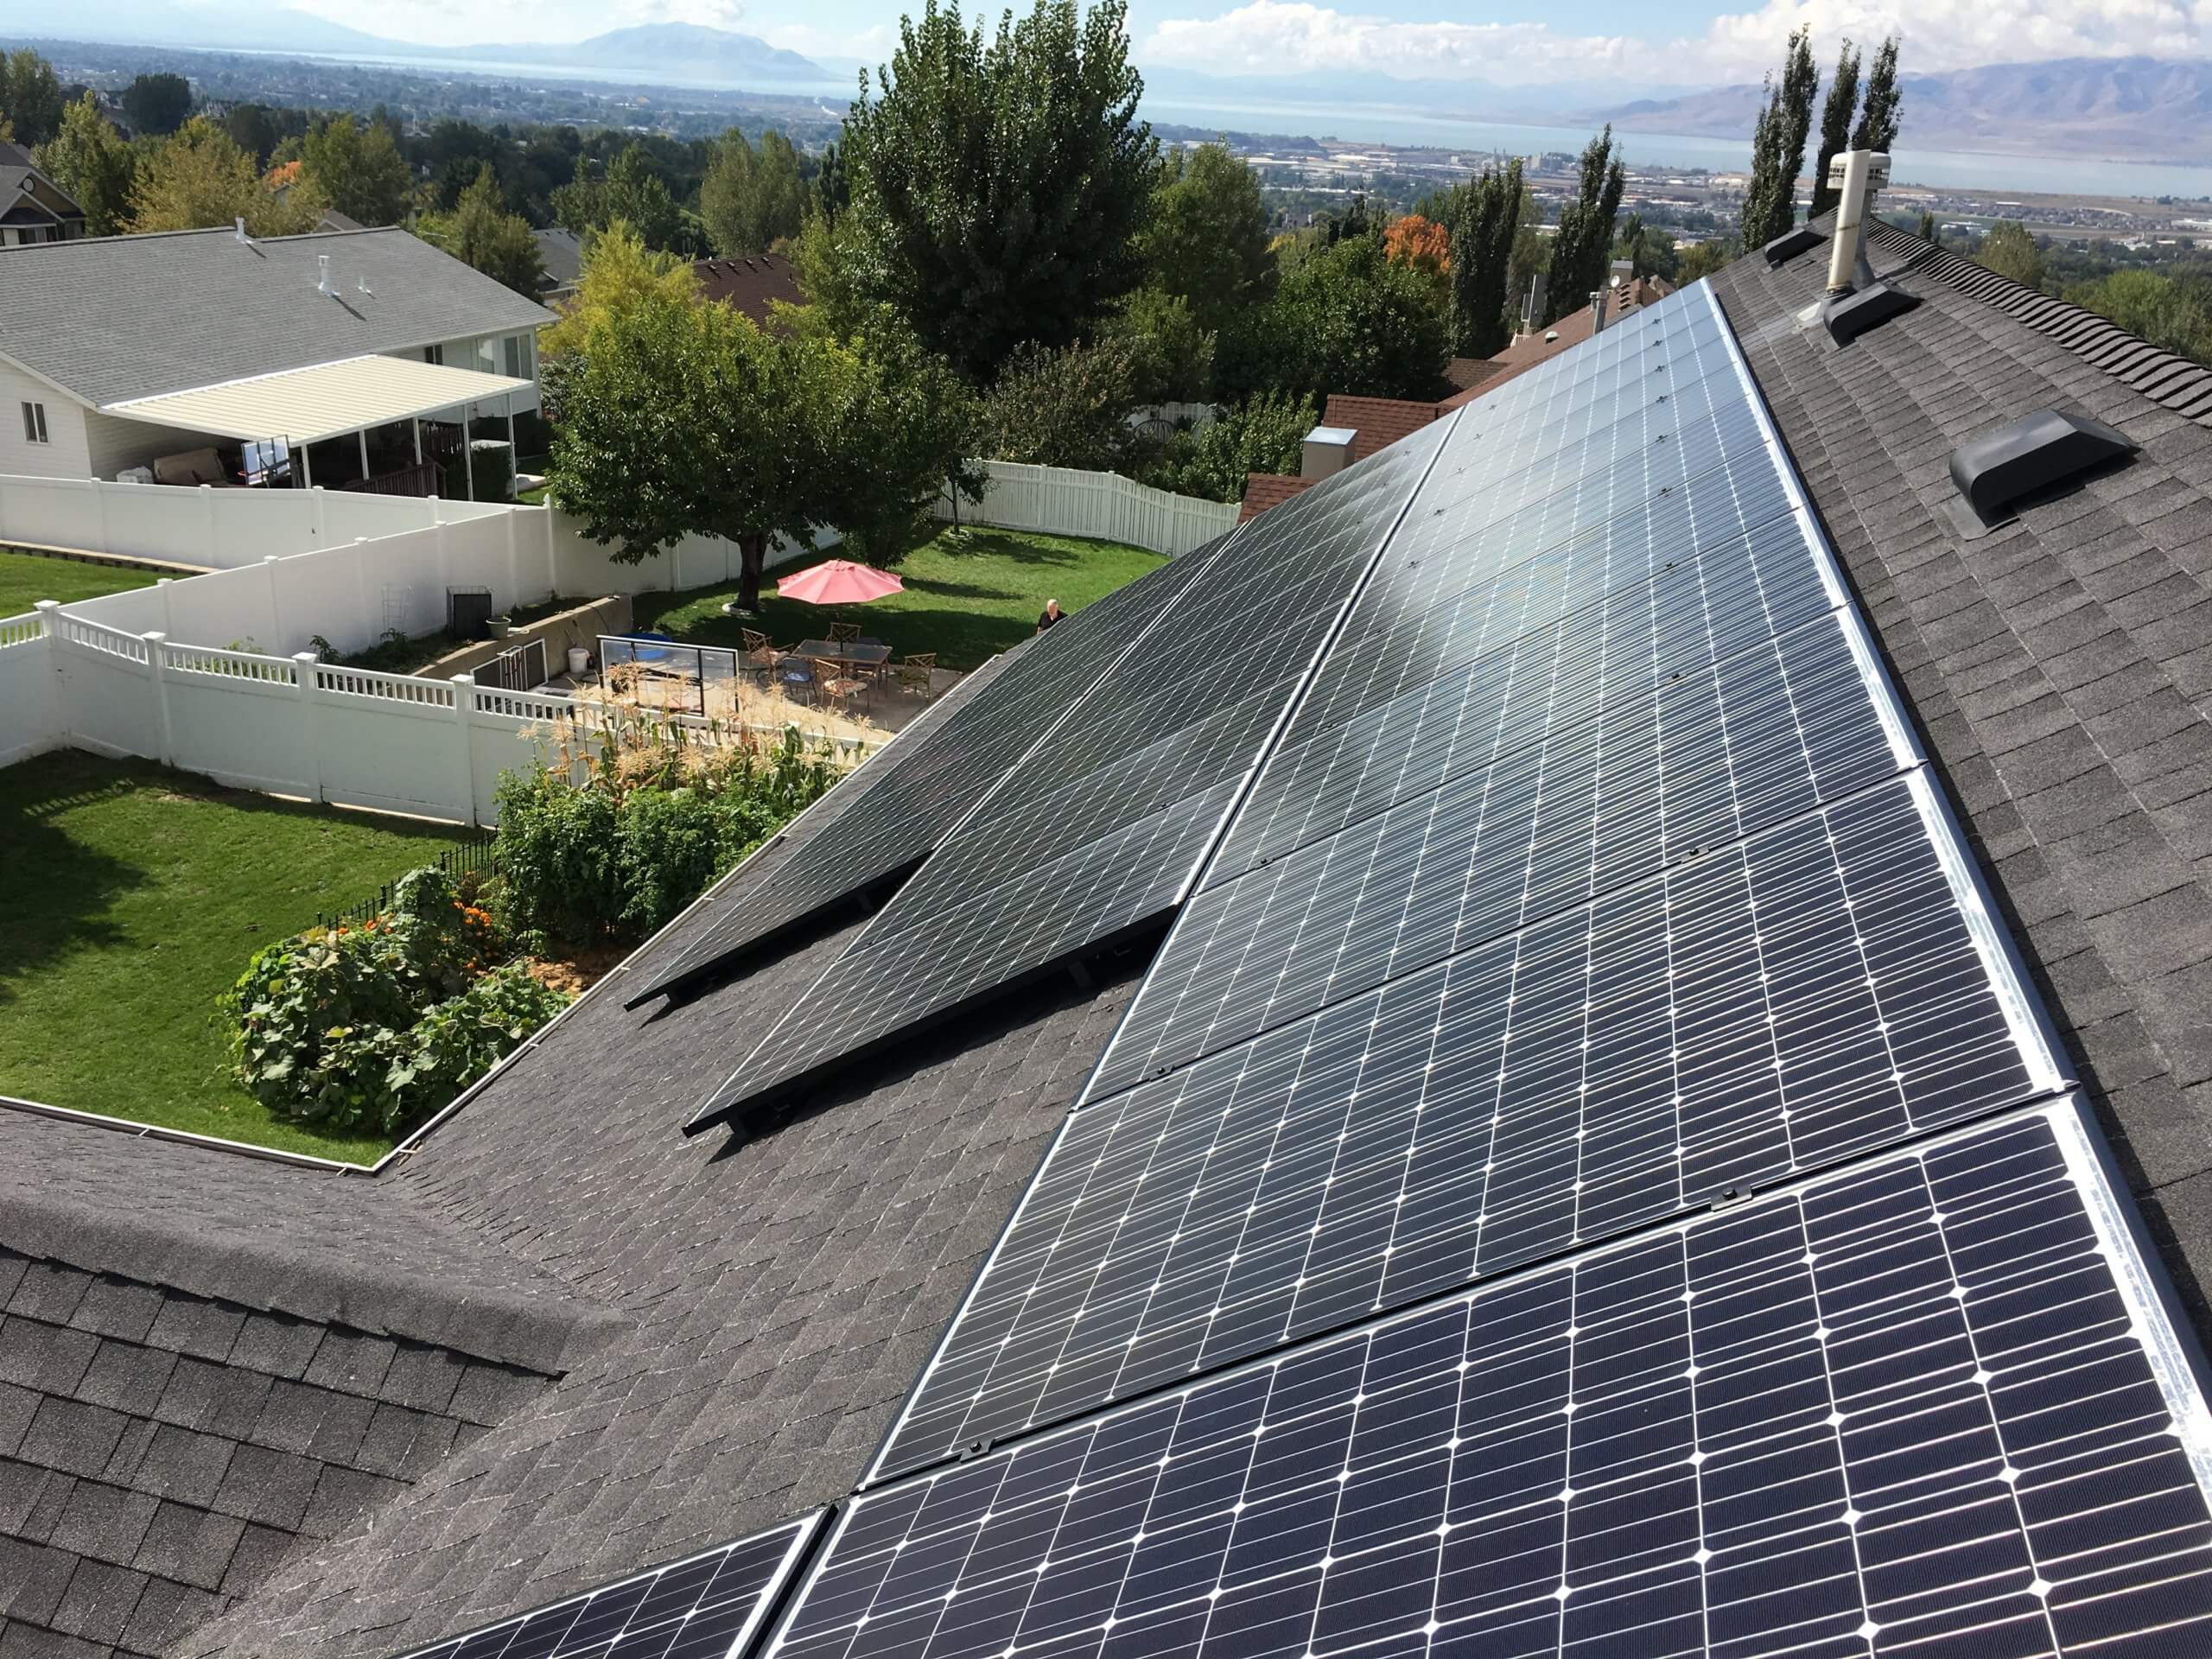 redstone-solar-pleasant-grove-utah-solar-energy-system-panasonic-hit-solar-panels